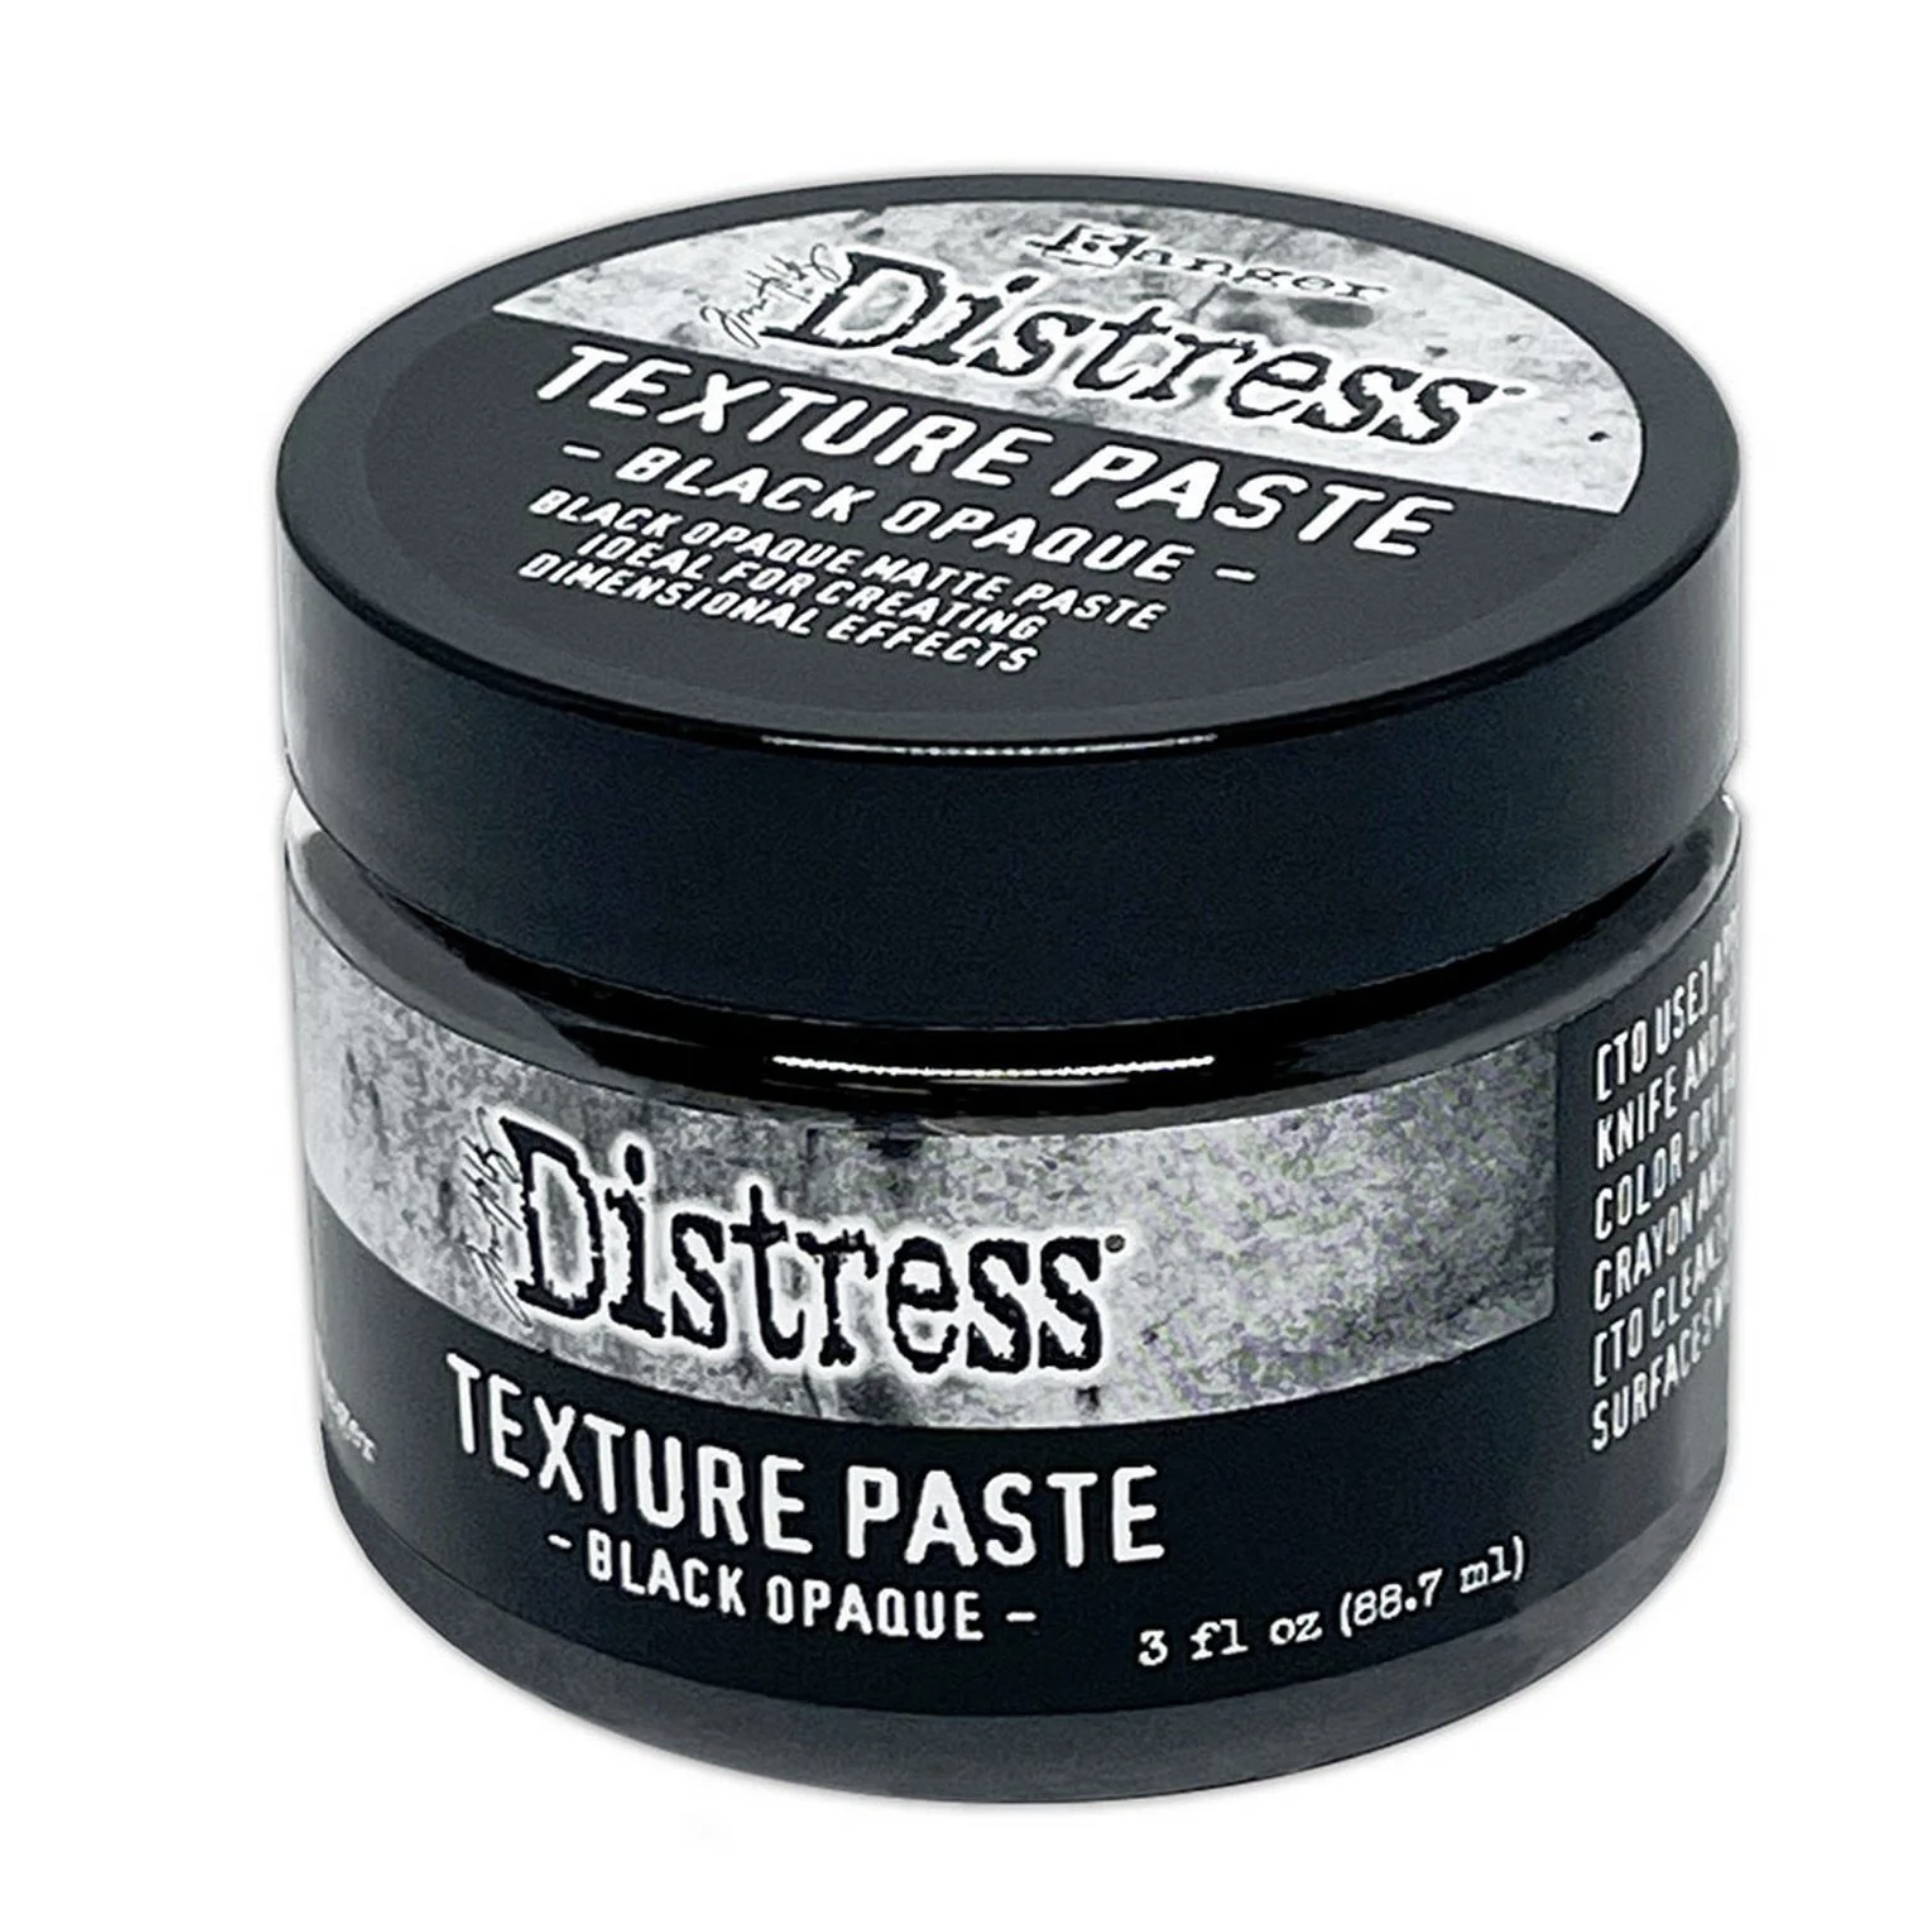 Distess Texture Paste Black Opaque